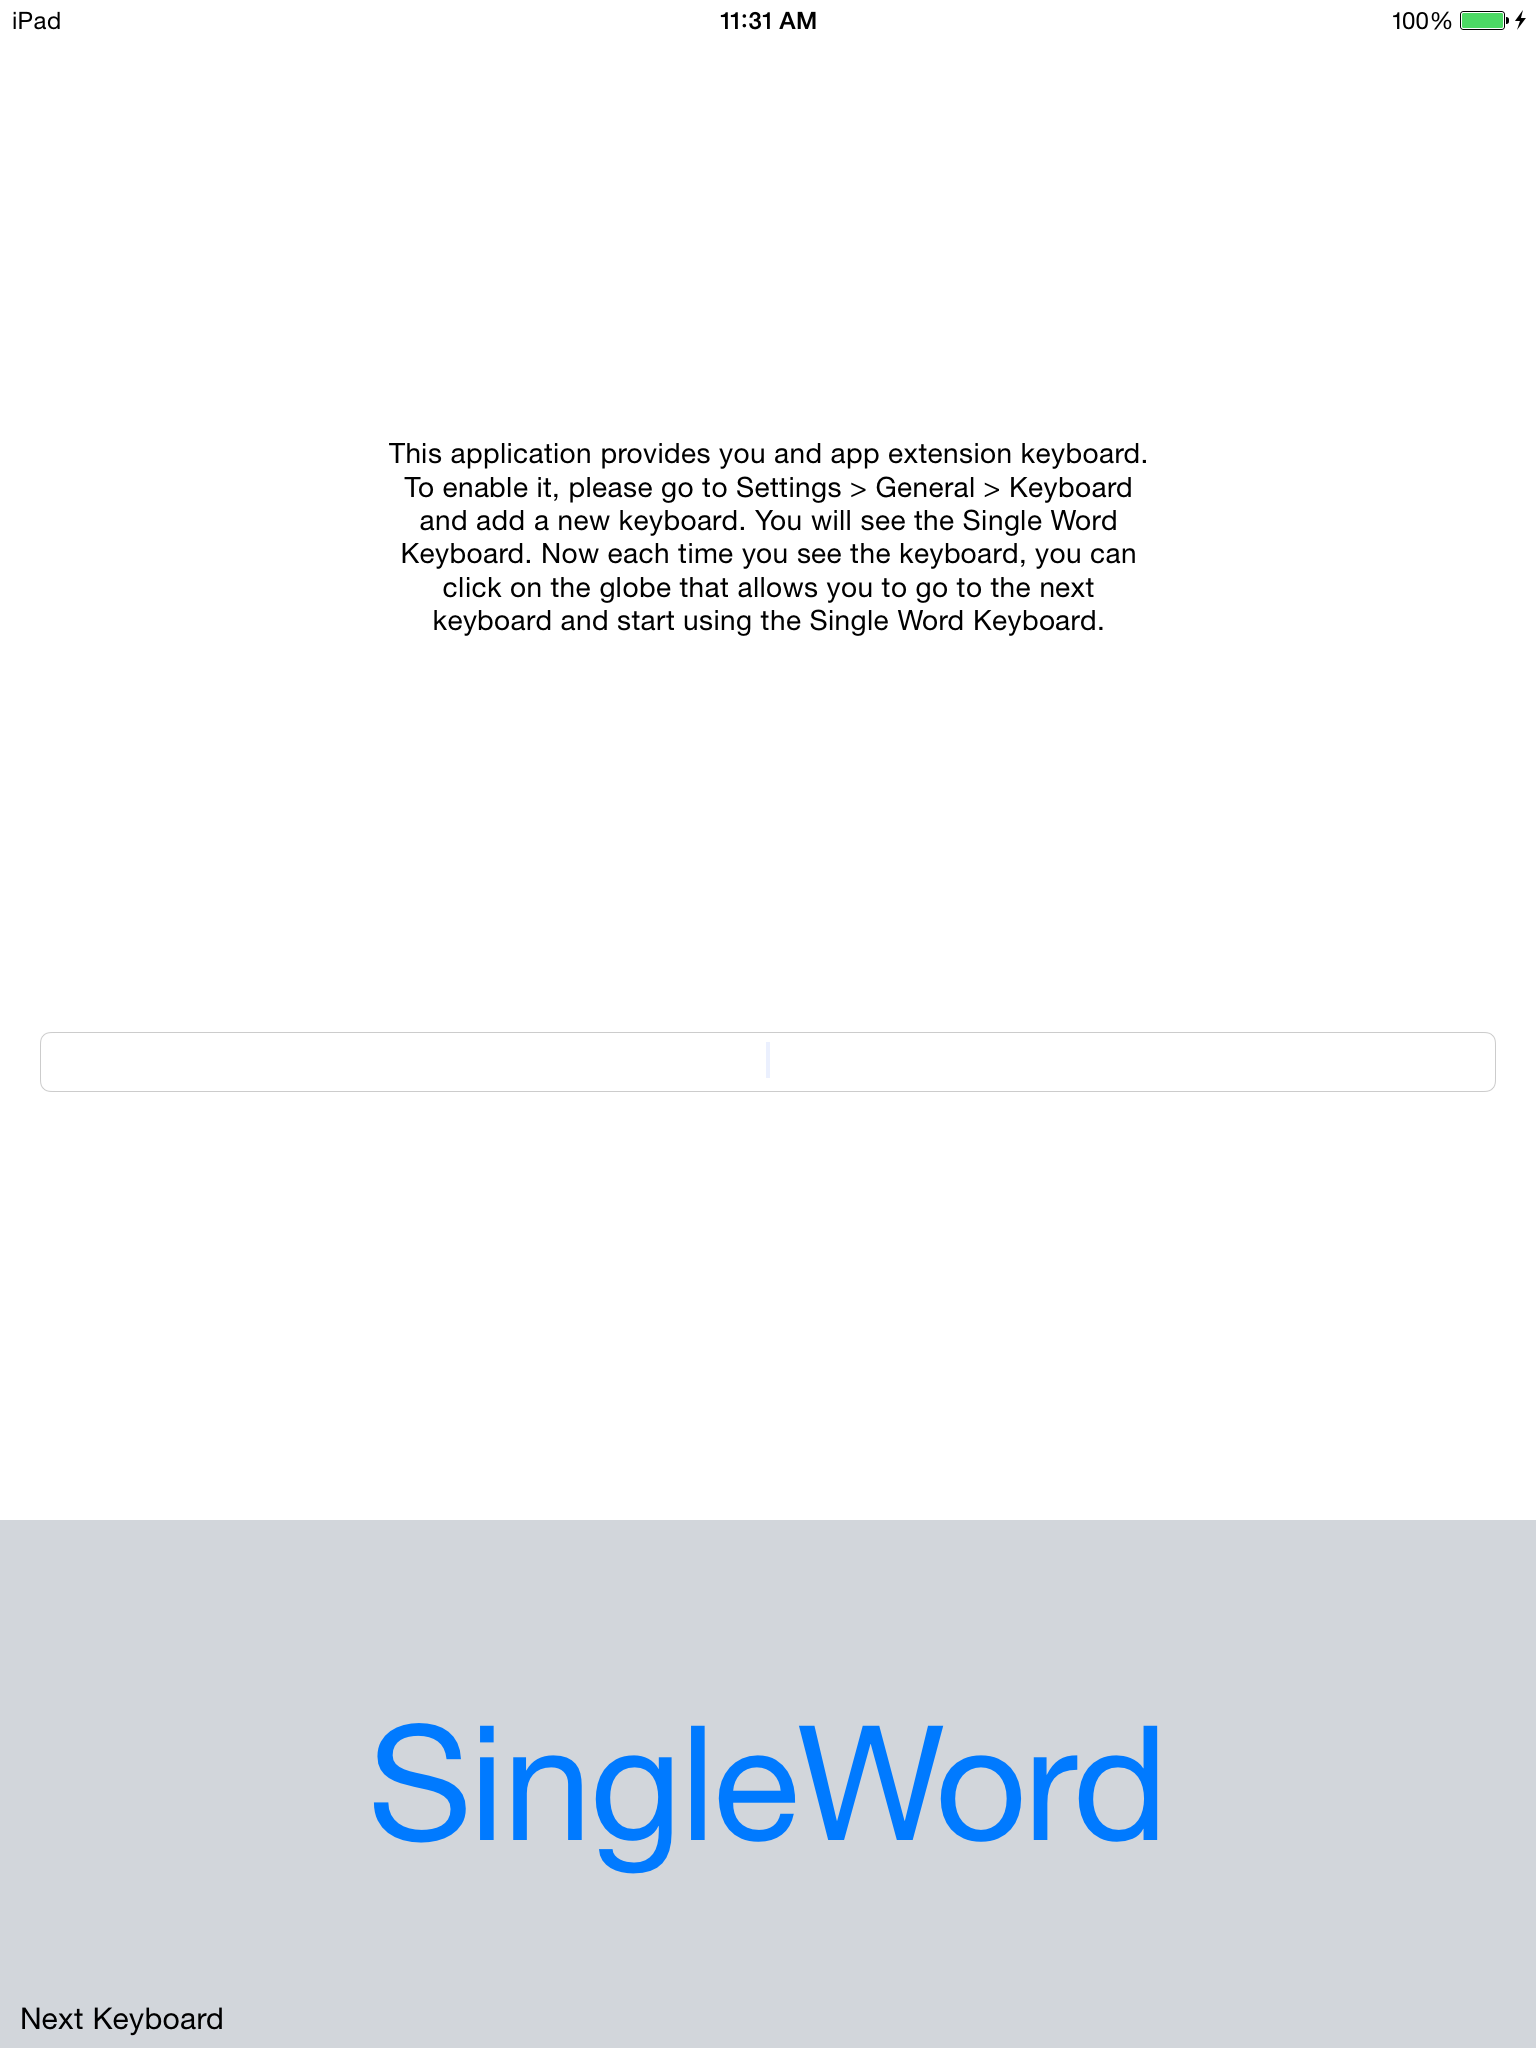 Single Word Keyboard application screenshot